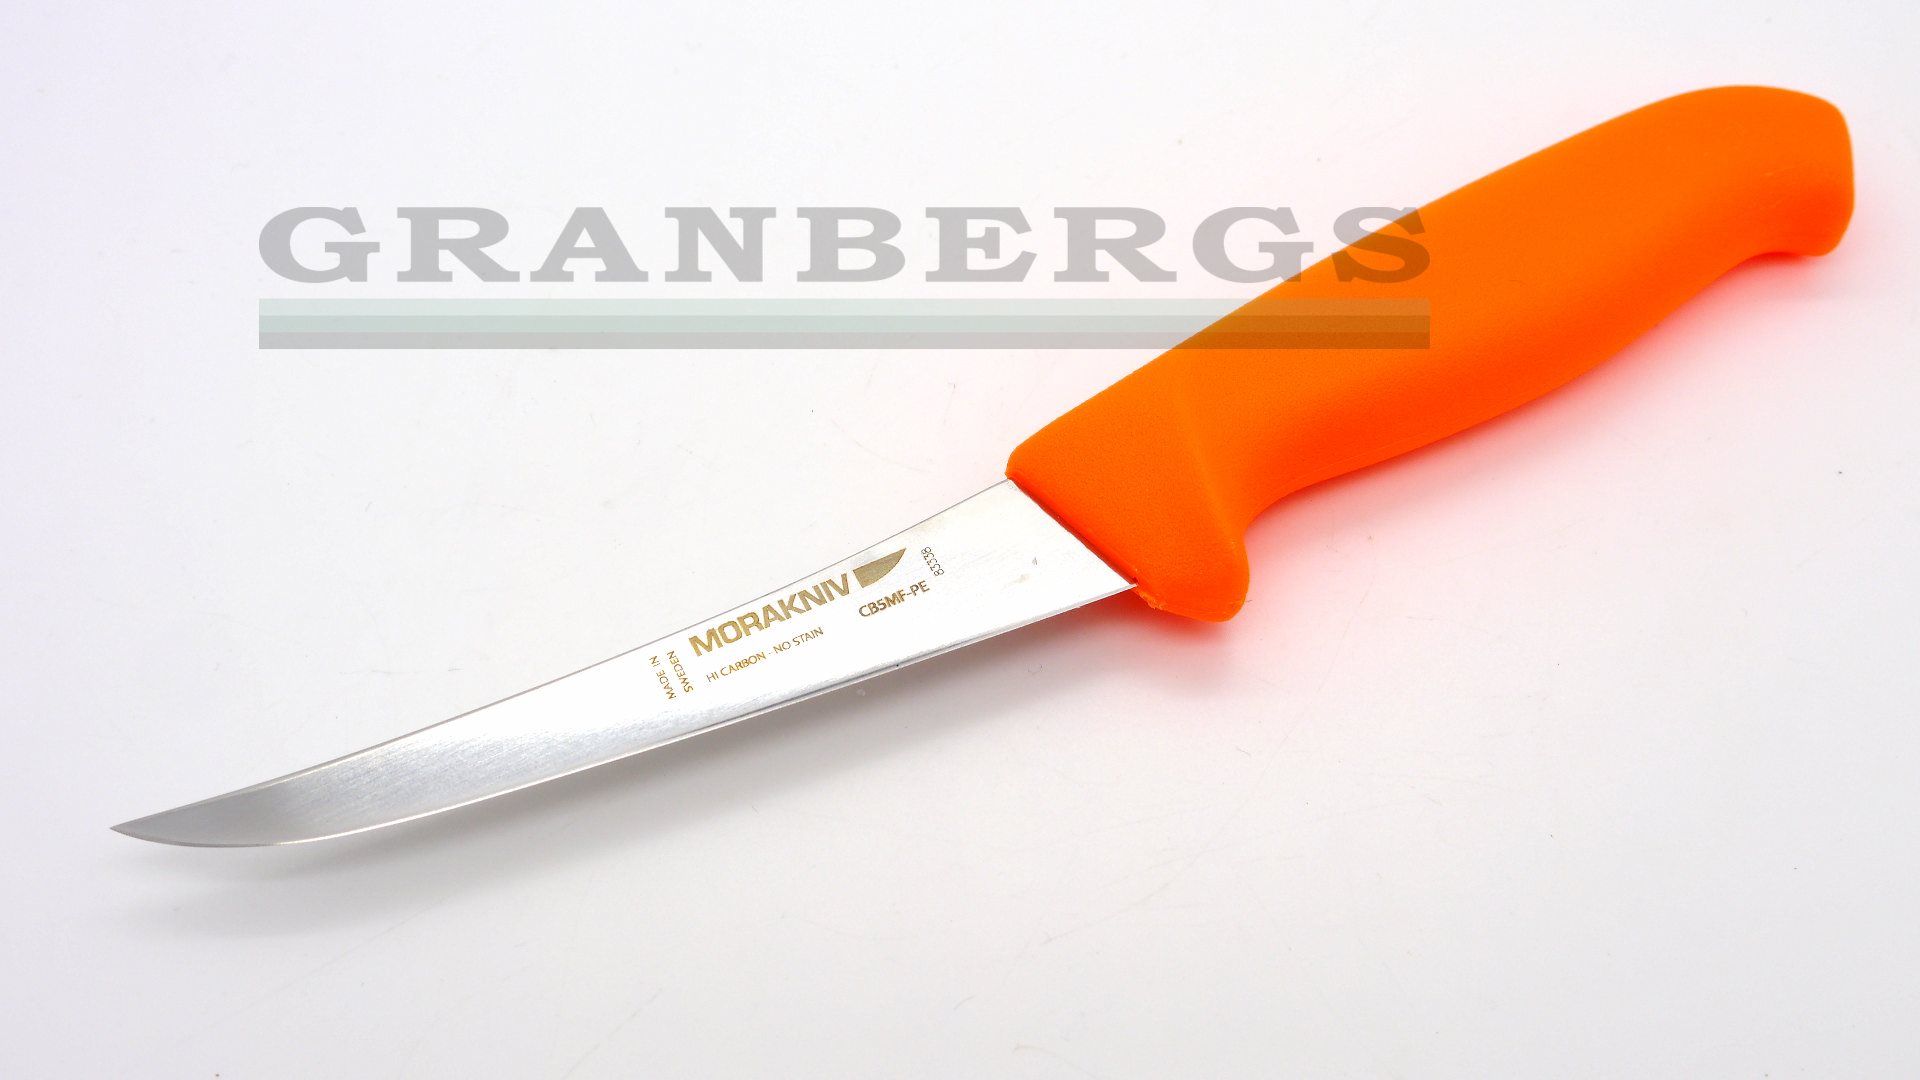 https://granbergs.com.au/getattachment/Products/Knives-Outdoors/Morakniv-Hunting-Set-3000-Orange-Hunting-Knives-2p/P1090816Morakniv-Hunting-Set-3000-1920p-Watermark.jpg.aspx